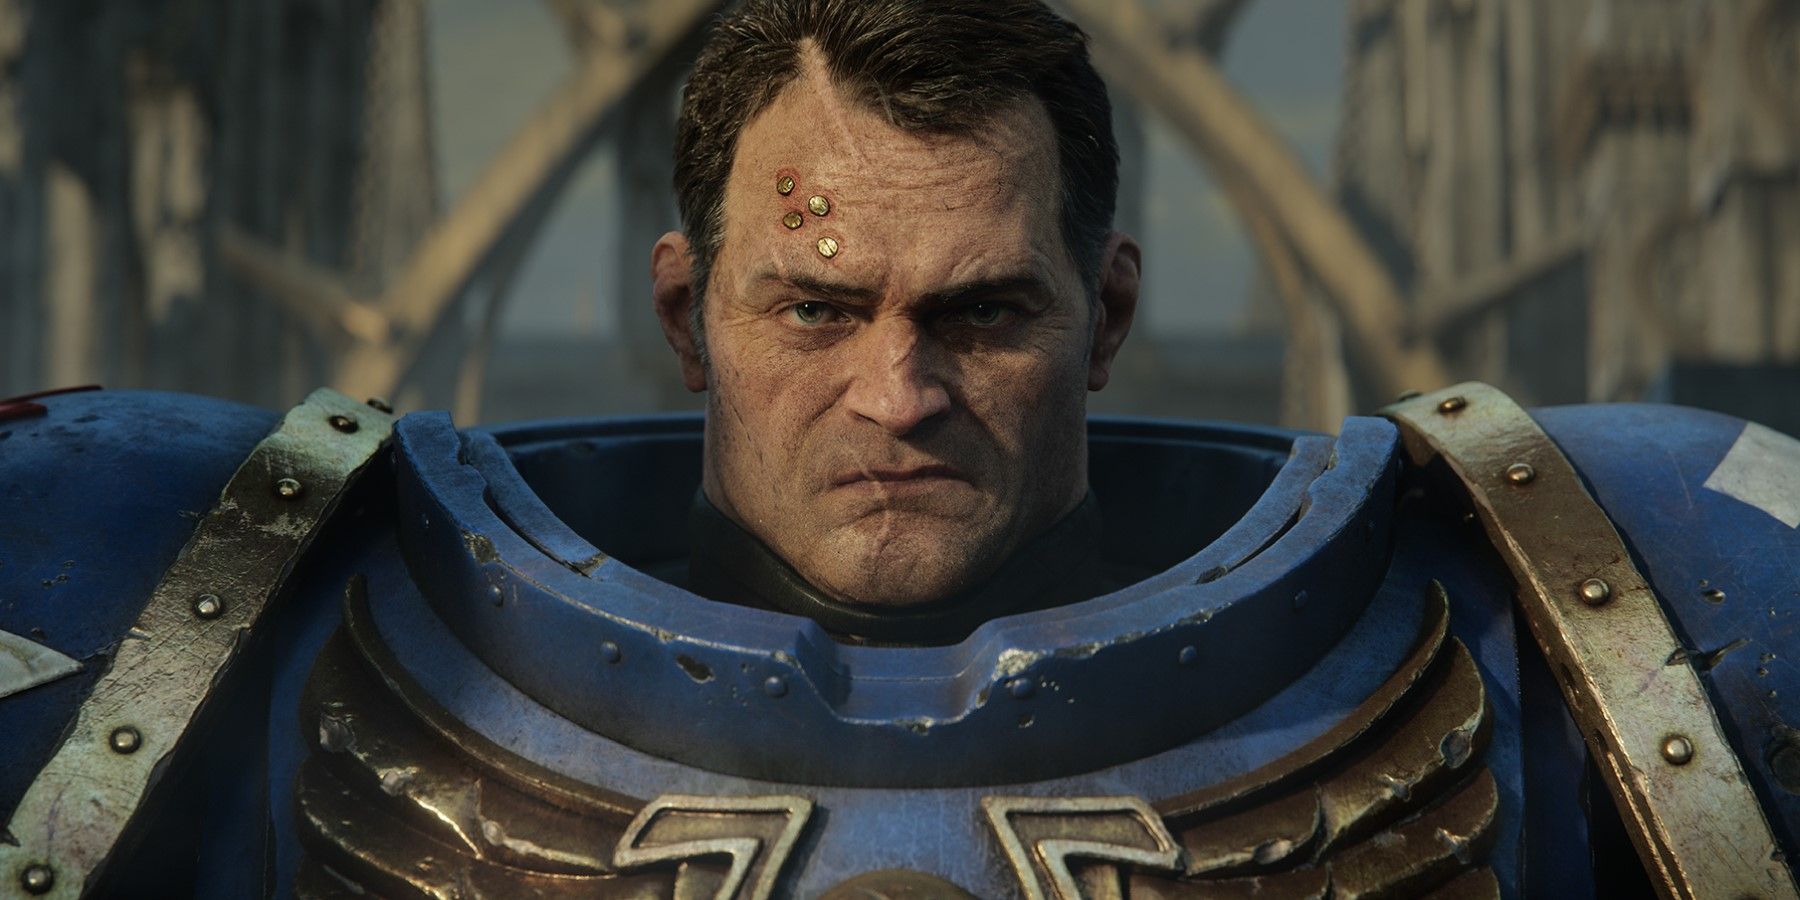 Warhammer 40,000: Space Marine 2 protagonist Captain Titus